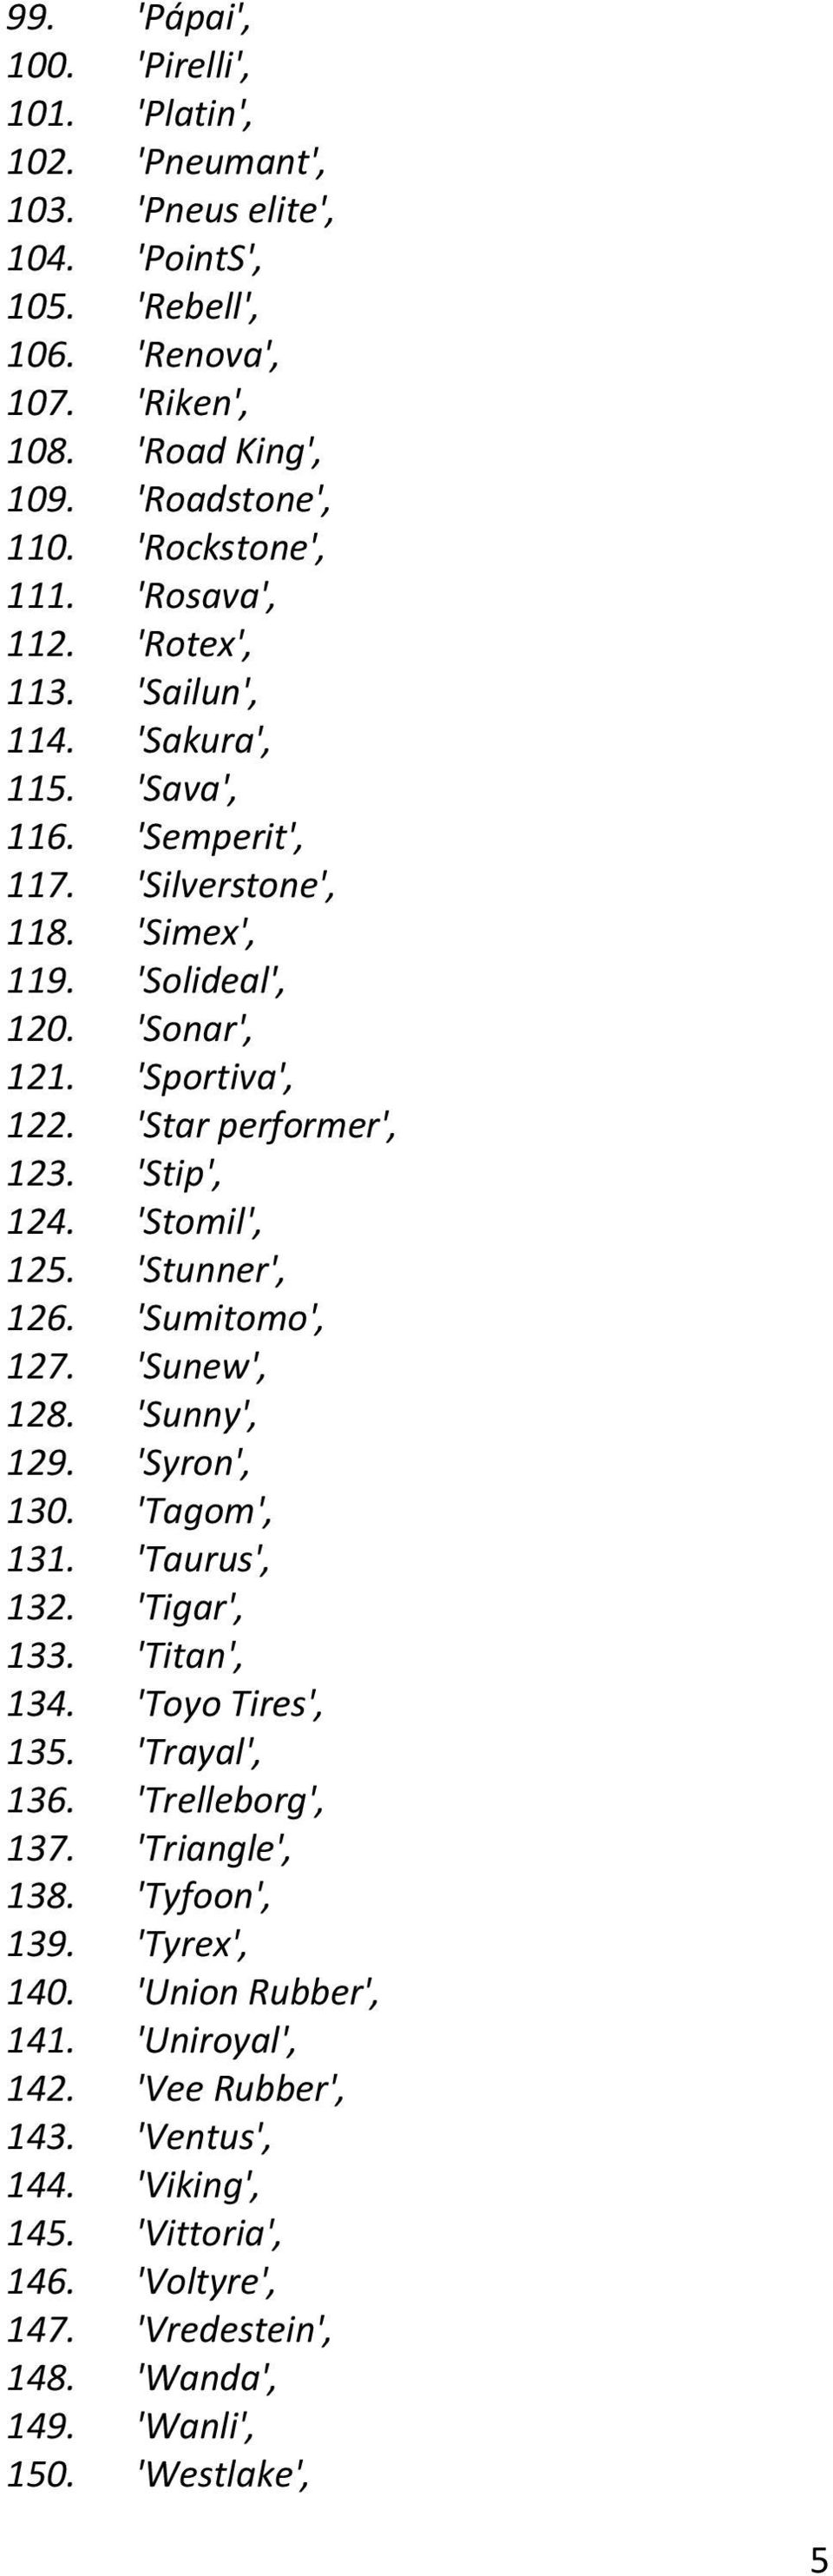 'Stip', 124. 'Stomil', 125. 'Stunner', 126. 'Sumitomo', 127. 'Sunew', 128. 'Sunny', 129. 'Syron', 130. 'Tagom', 131. 'Taurus', 132. 'Tigar', 133. 'Titan', 134. 'Toyo Tires', 135. 'Trayal', 136.